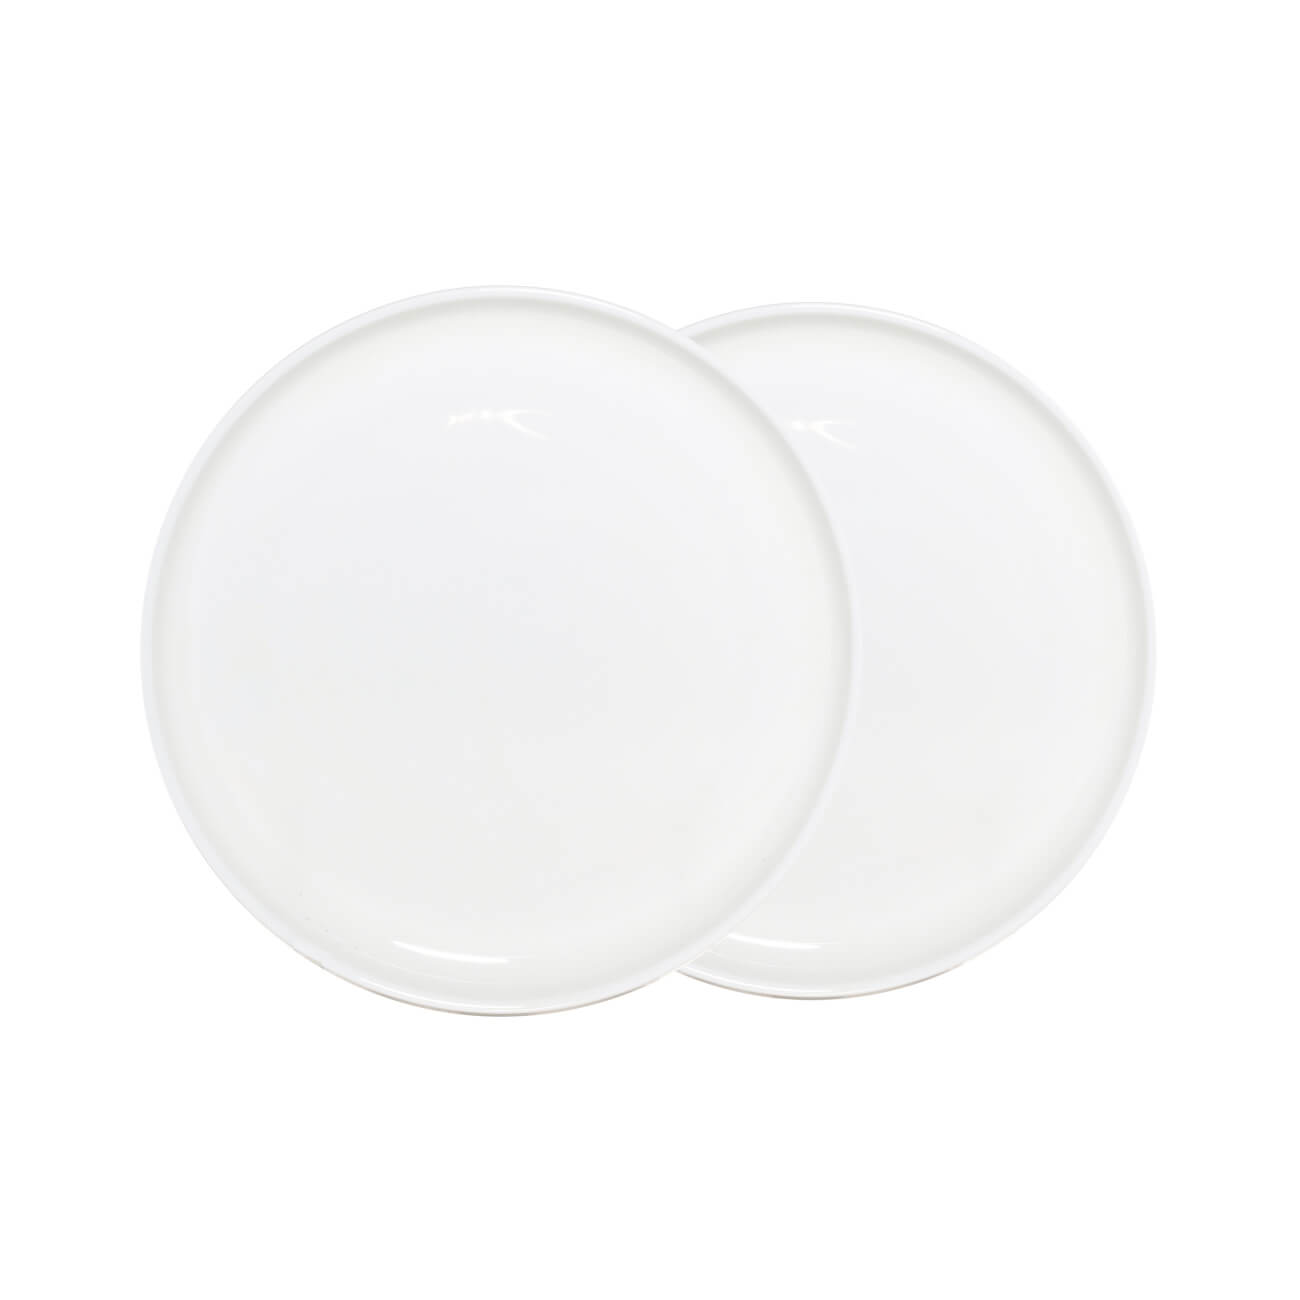 Тарелка десертная, 20 см, 2 шт, фарфор F, белая, Ideal white керамическая десертная тарелка perfecto linea